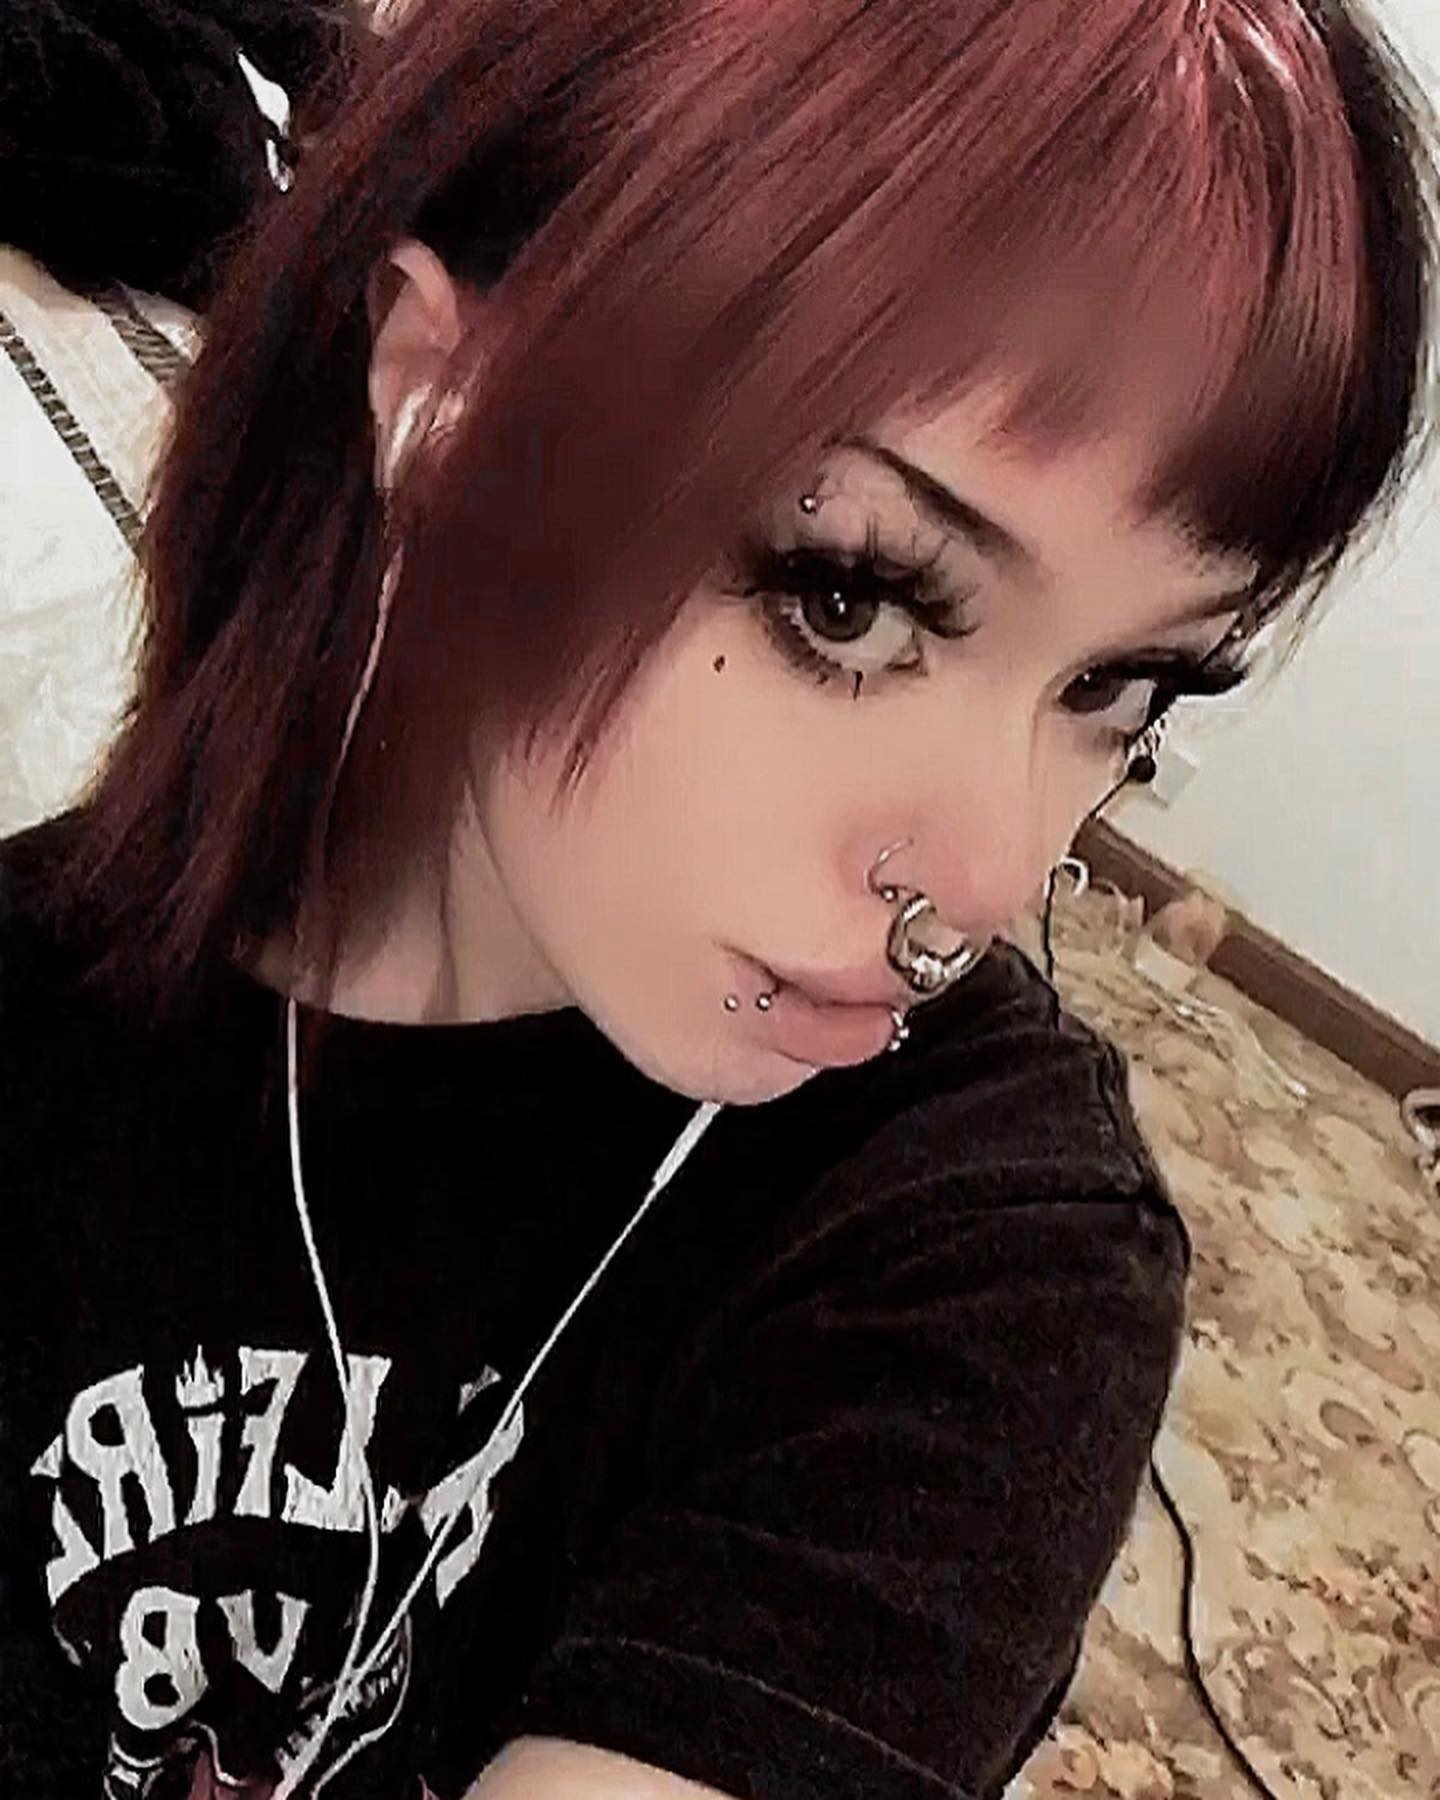 back to red 💋
-
-
-
-
-
-
-
-
-
-
-
-
-
-
-
-
-
-
-
-
-
-
-
-
-
-
-
-
-
-
-
-
#goth #gothic #gothgirl #catgirl #alt #alternative #alternativegirl #alternativefashion #altgirl #altmodel #emo #punk #grunge #metalhead #piercings #redhair #hairdye #makeup #makeupinspo #fashion #fashioninspo #darkfashion #gothgoth #gothstyle #contentcreator #mullet #emogirl #vampire #metalgirl #hairinspo